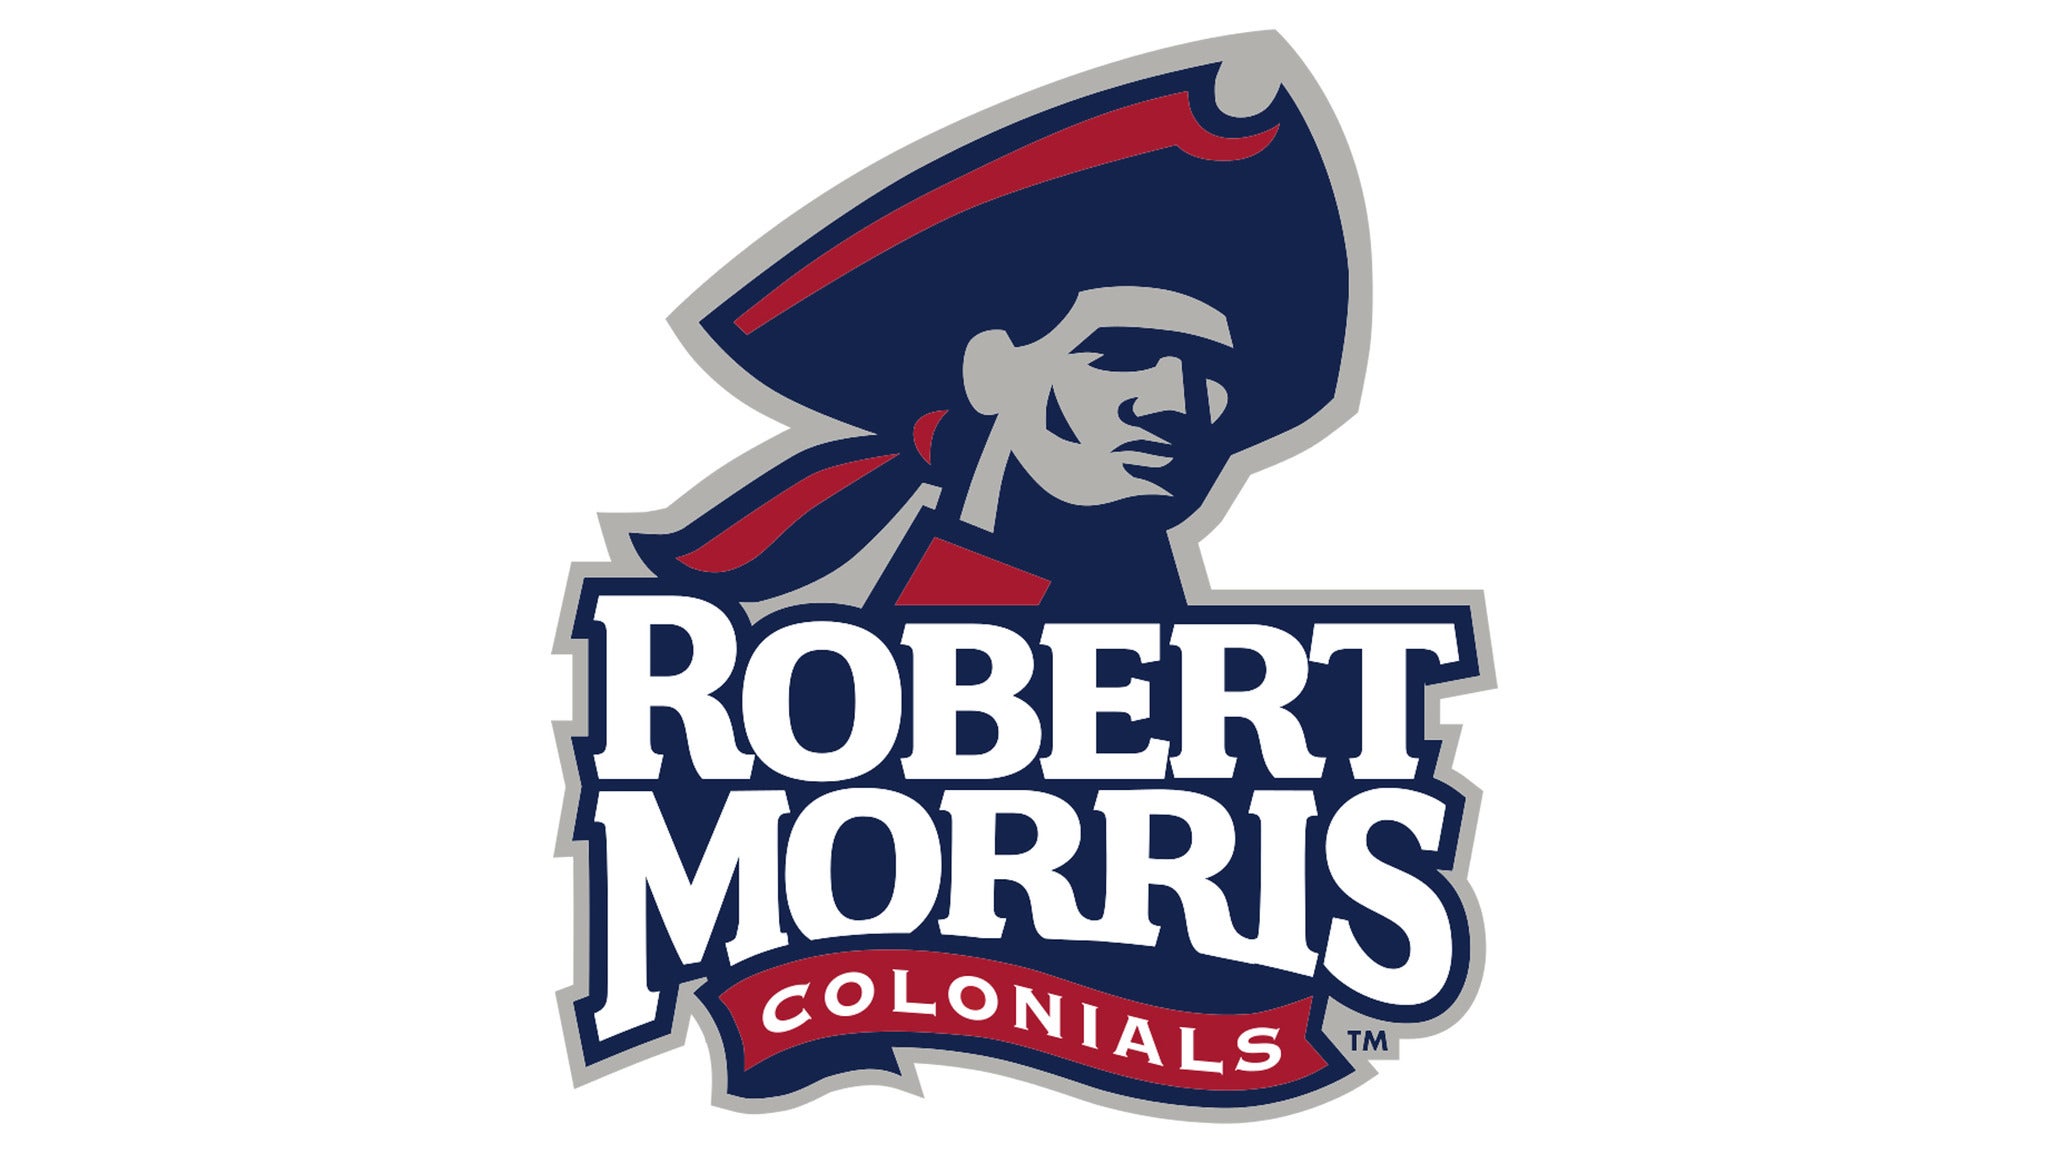 Robert Morris University Colonials Mens Basketball presale information on freepresalepasswords.com